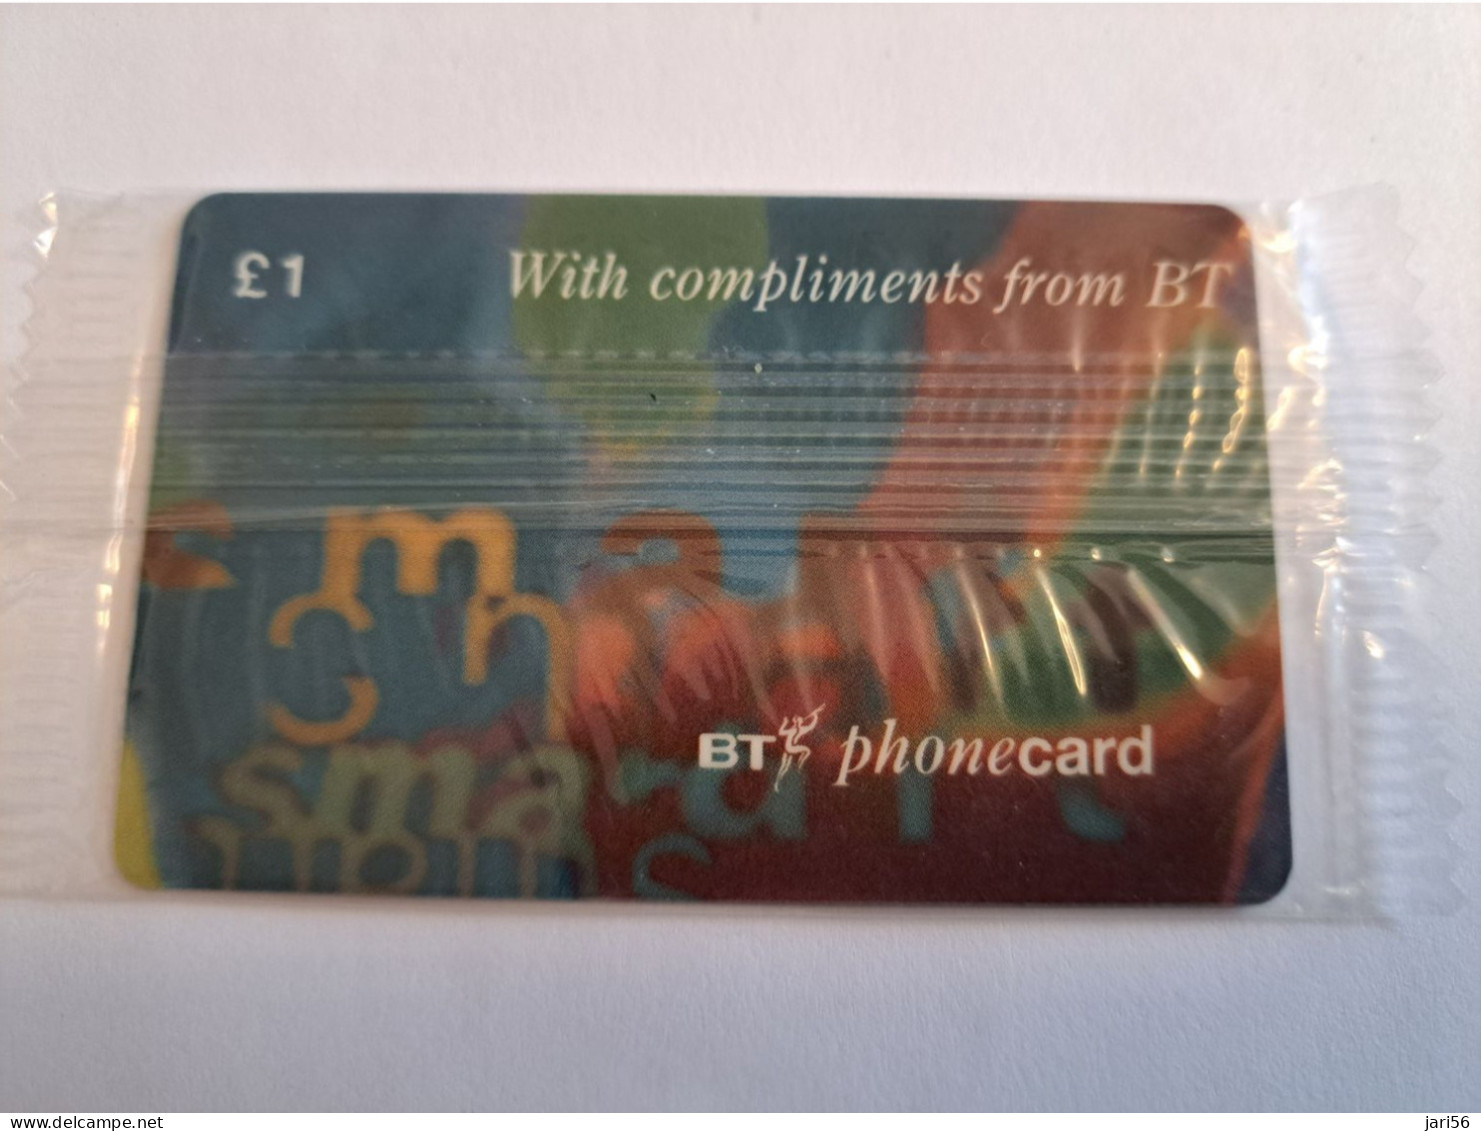 GREAT BRETAGNE  Chip Card / 1 POUND   Sealed In Wrapper/ Expired 09/96  MINT CONDITION      **16600 ** - BT Allgemeine